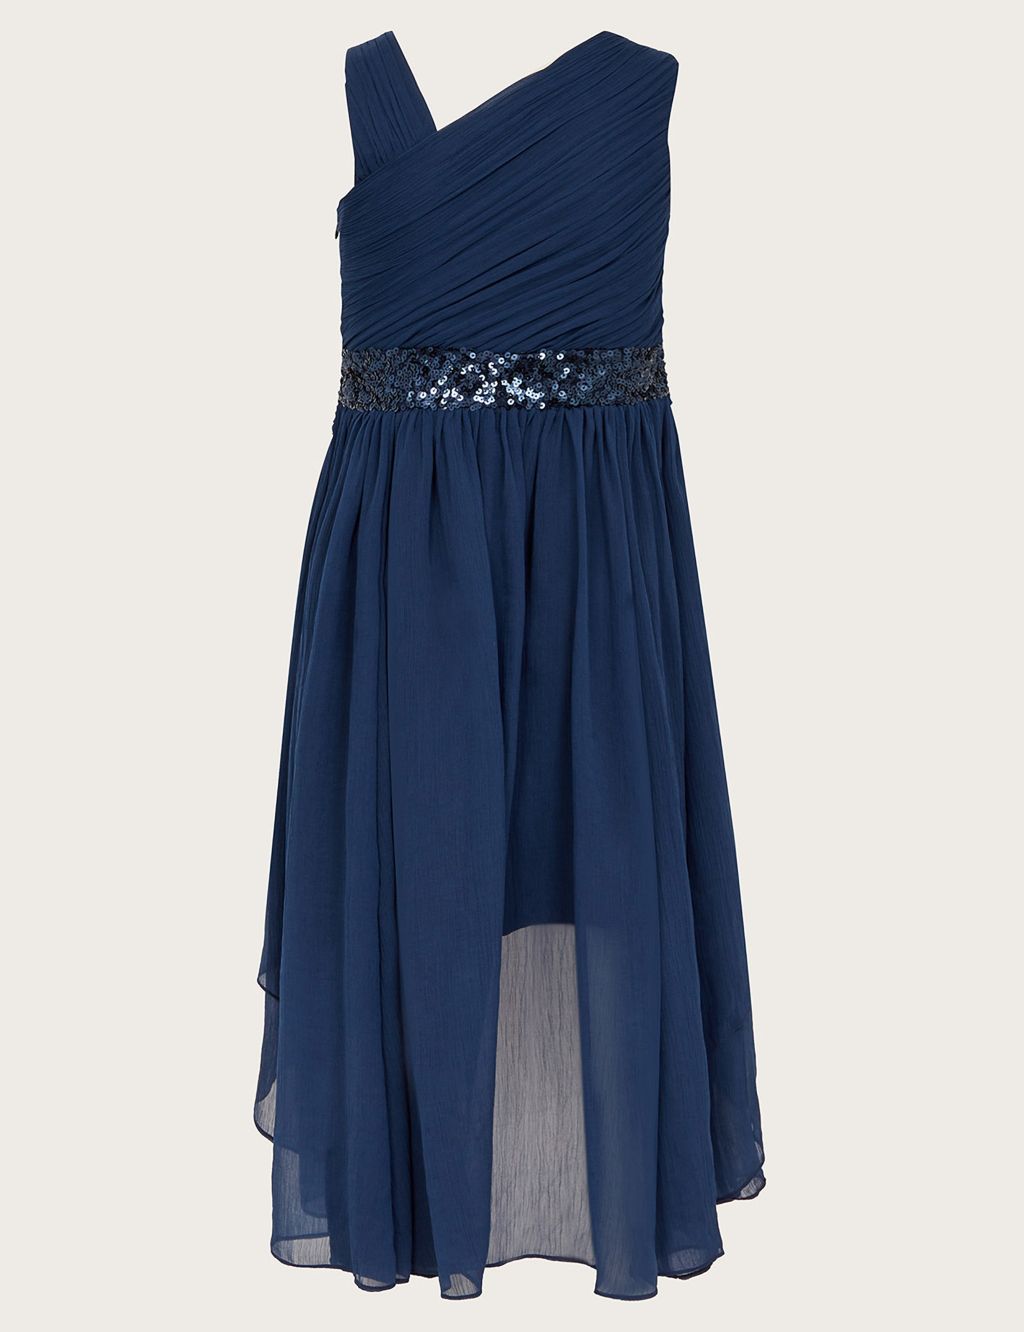 Sequin Chiffon Occasion Dress (8-15 Yrs) image 2